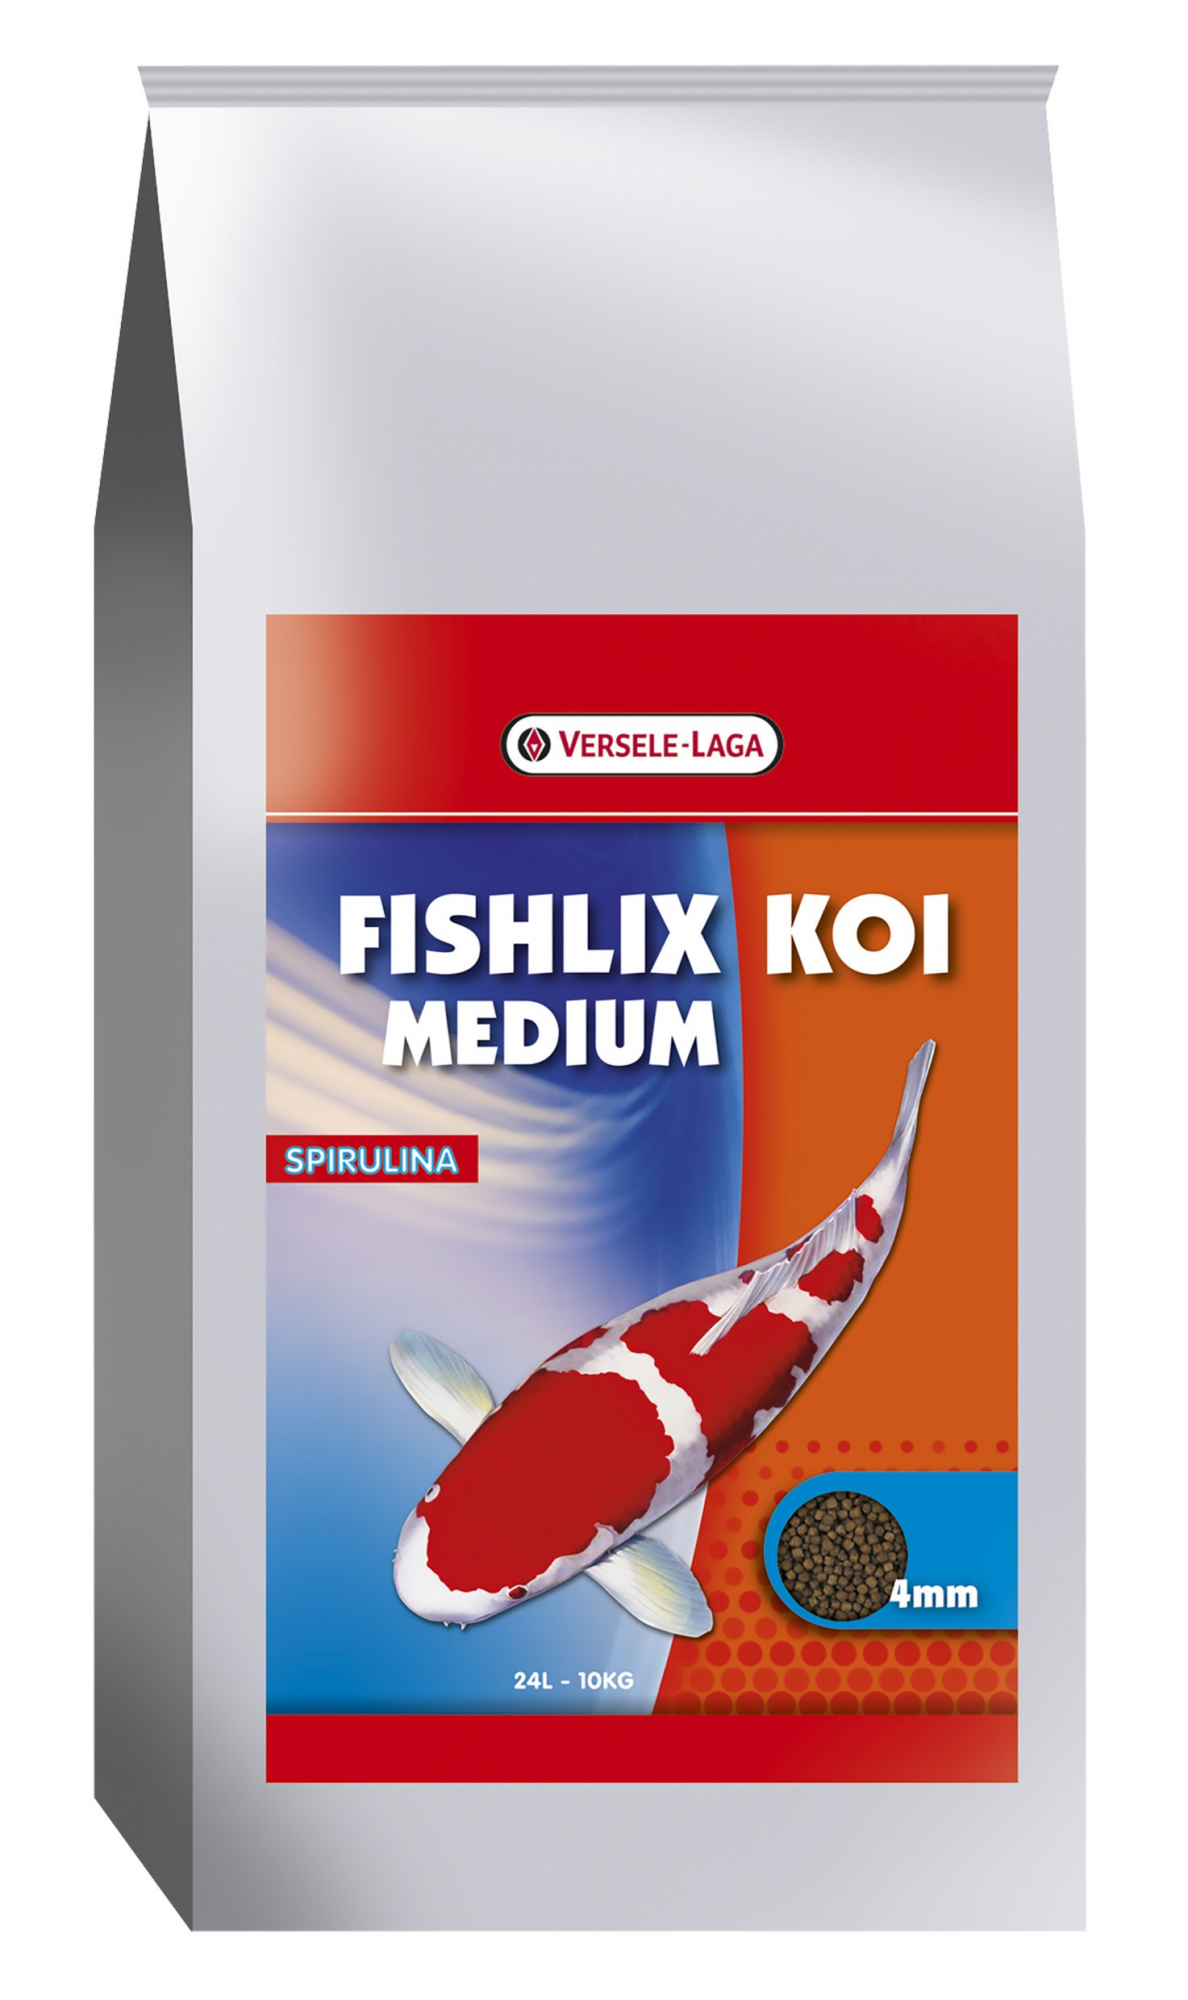 Fishlix Koi Medium 4 mm Granuli flottanti con koi